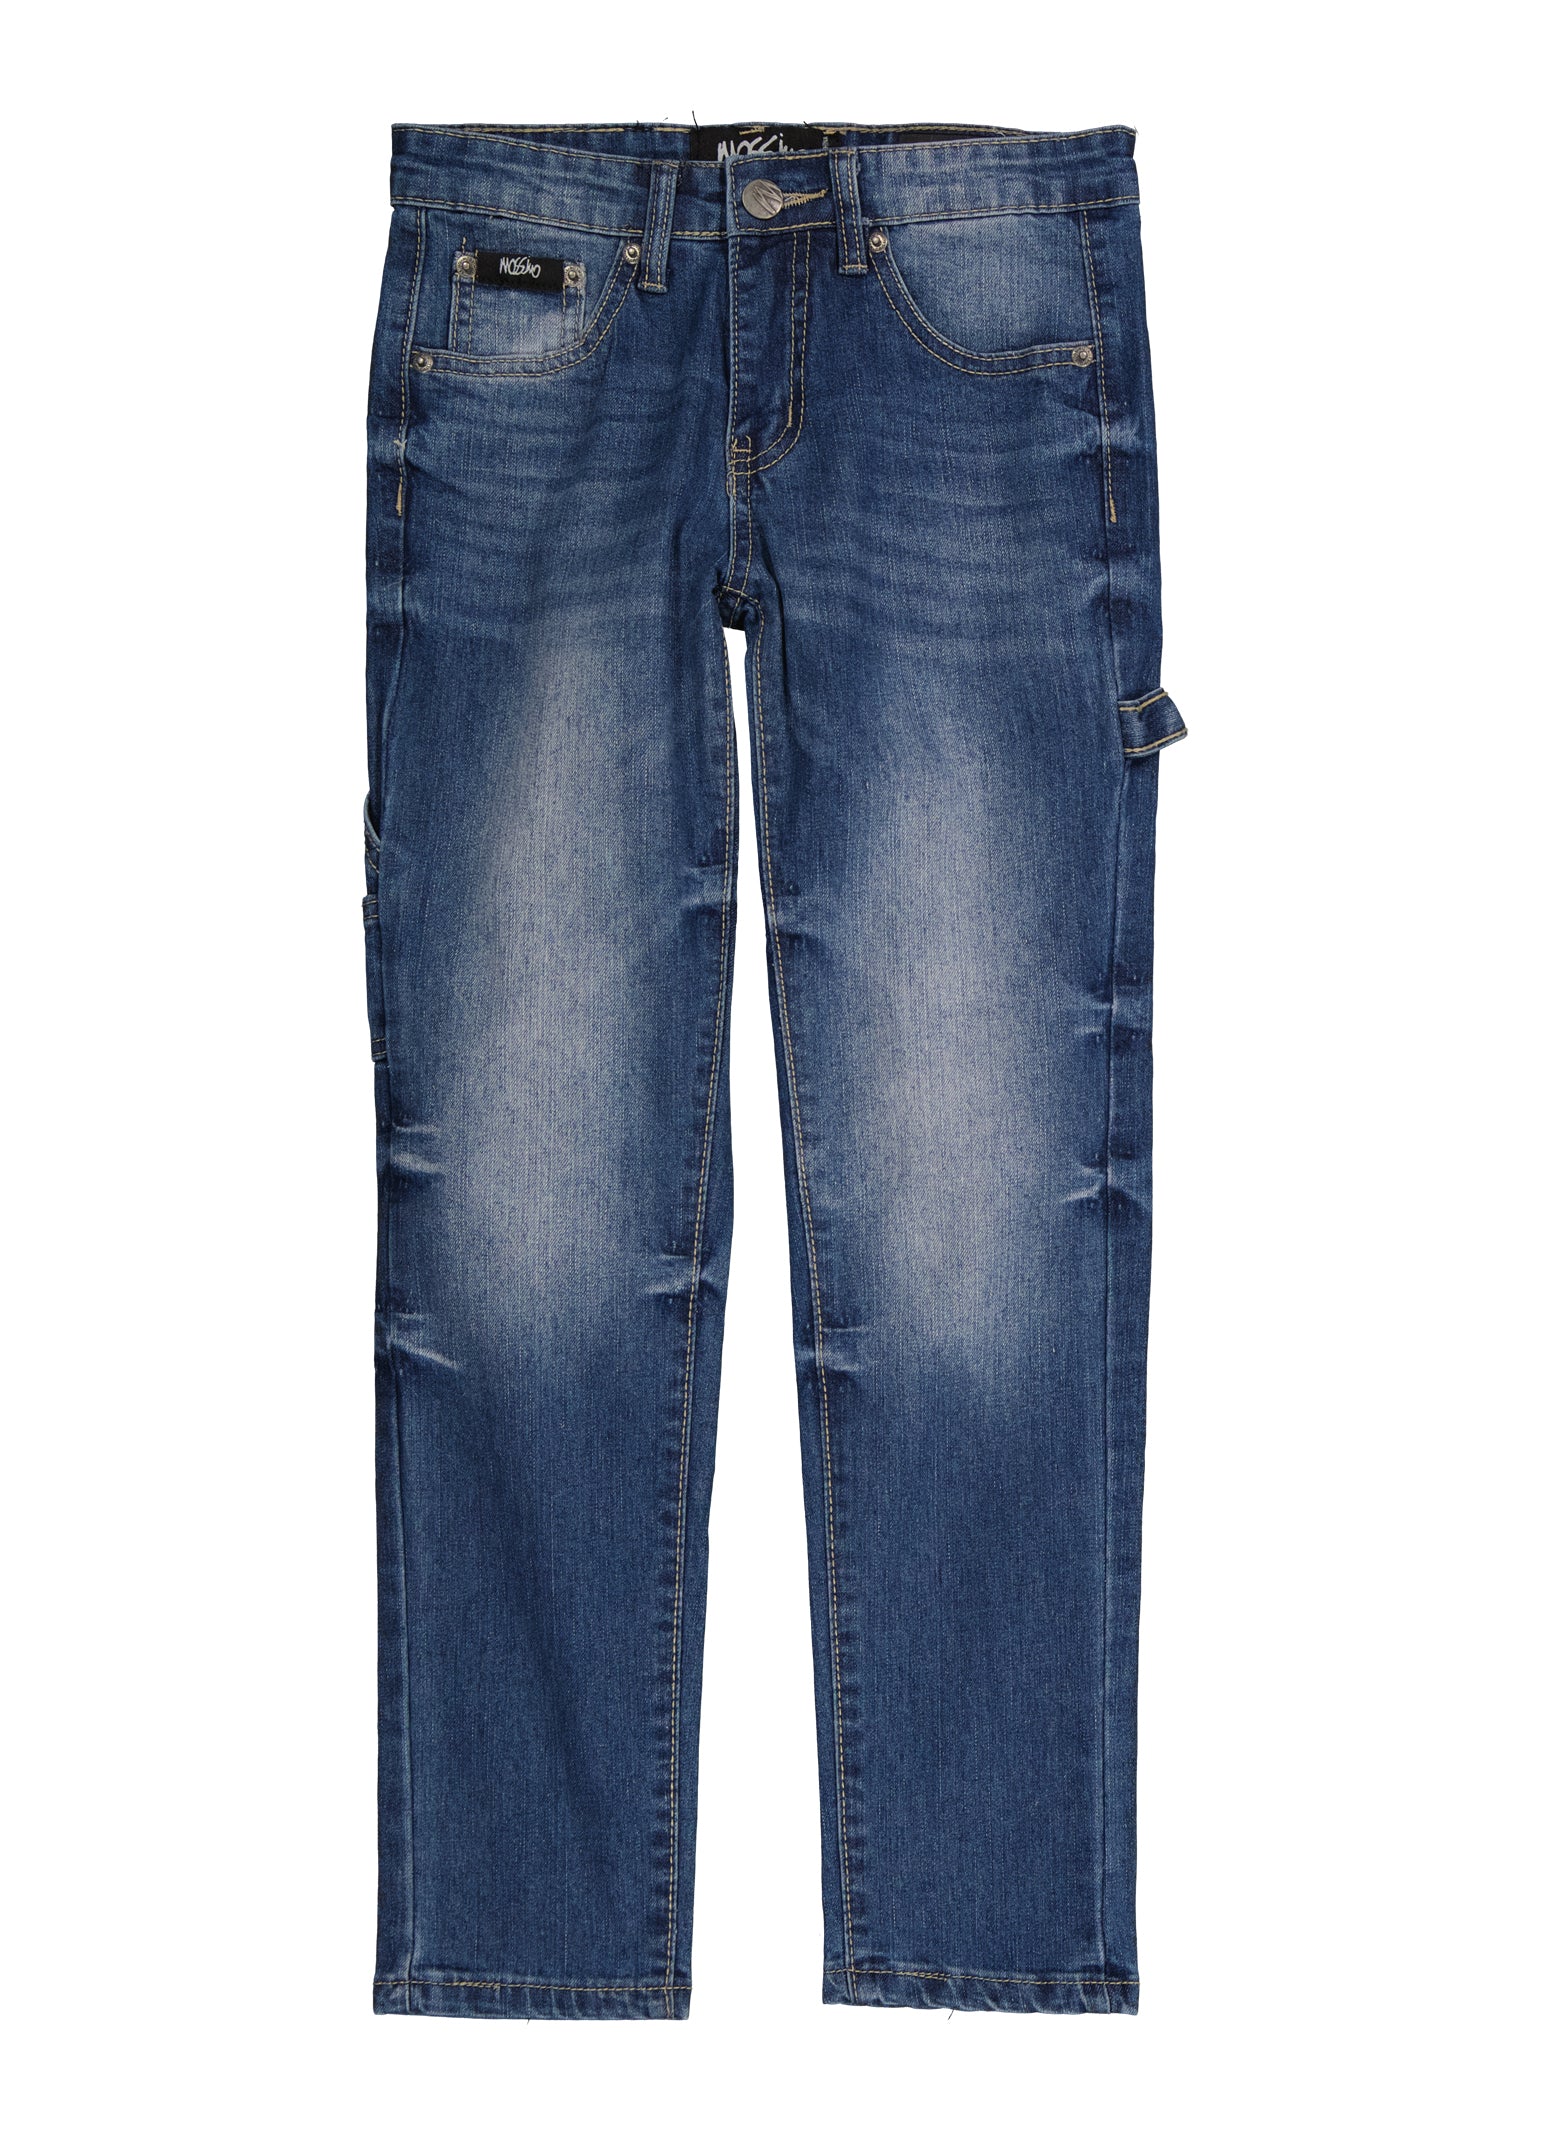 Boys Whiskered Carpenter Jeans, Blue, Size 8